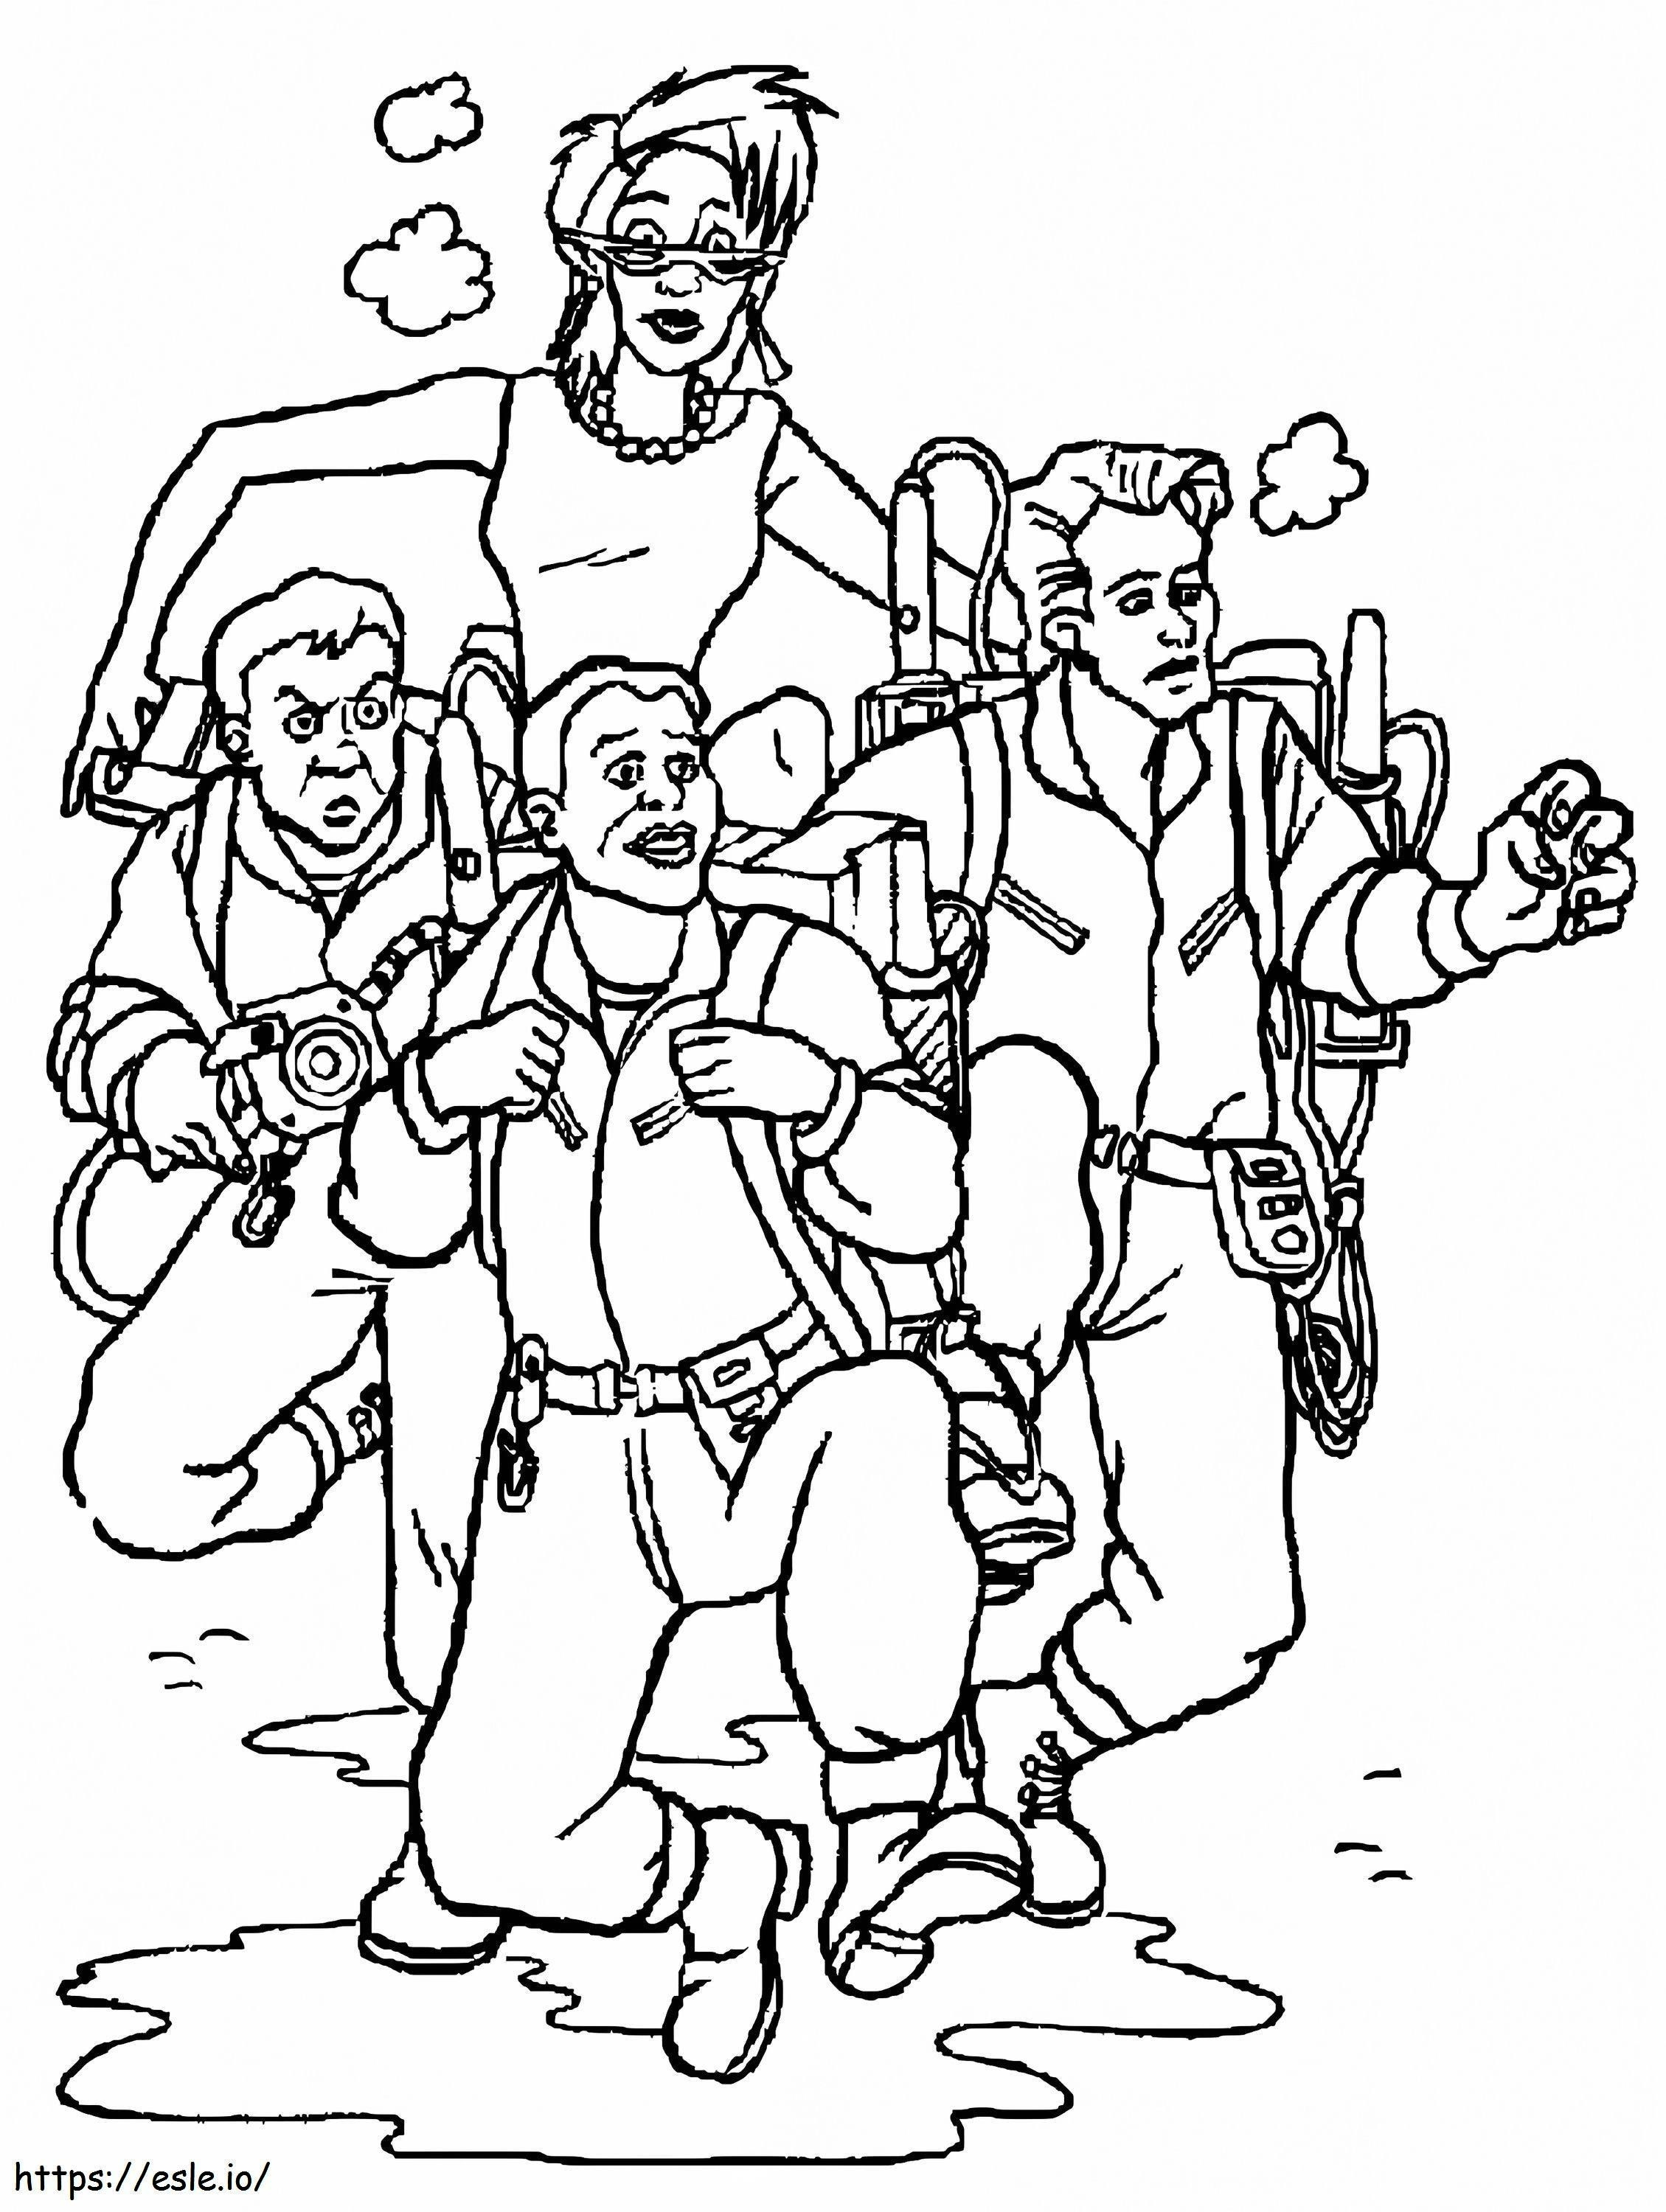 Vijf personages uit Ghostbusters Running kleurplaat kleurplaat